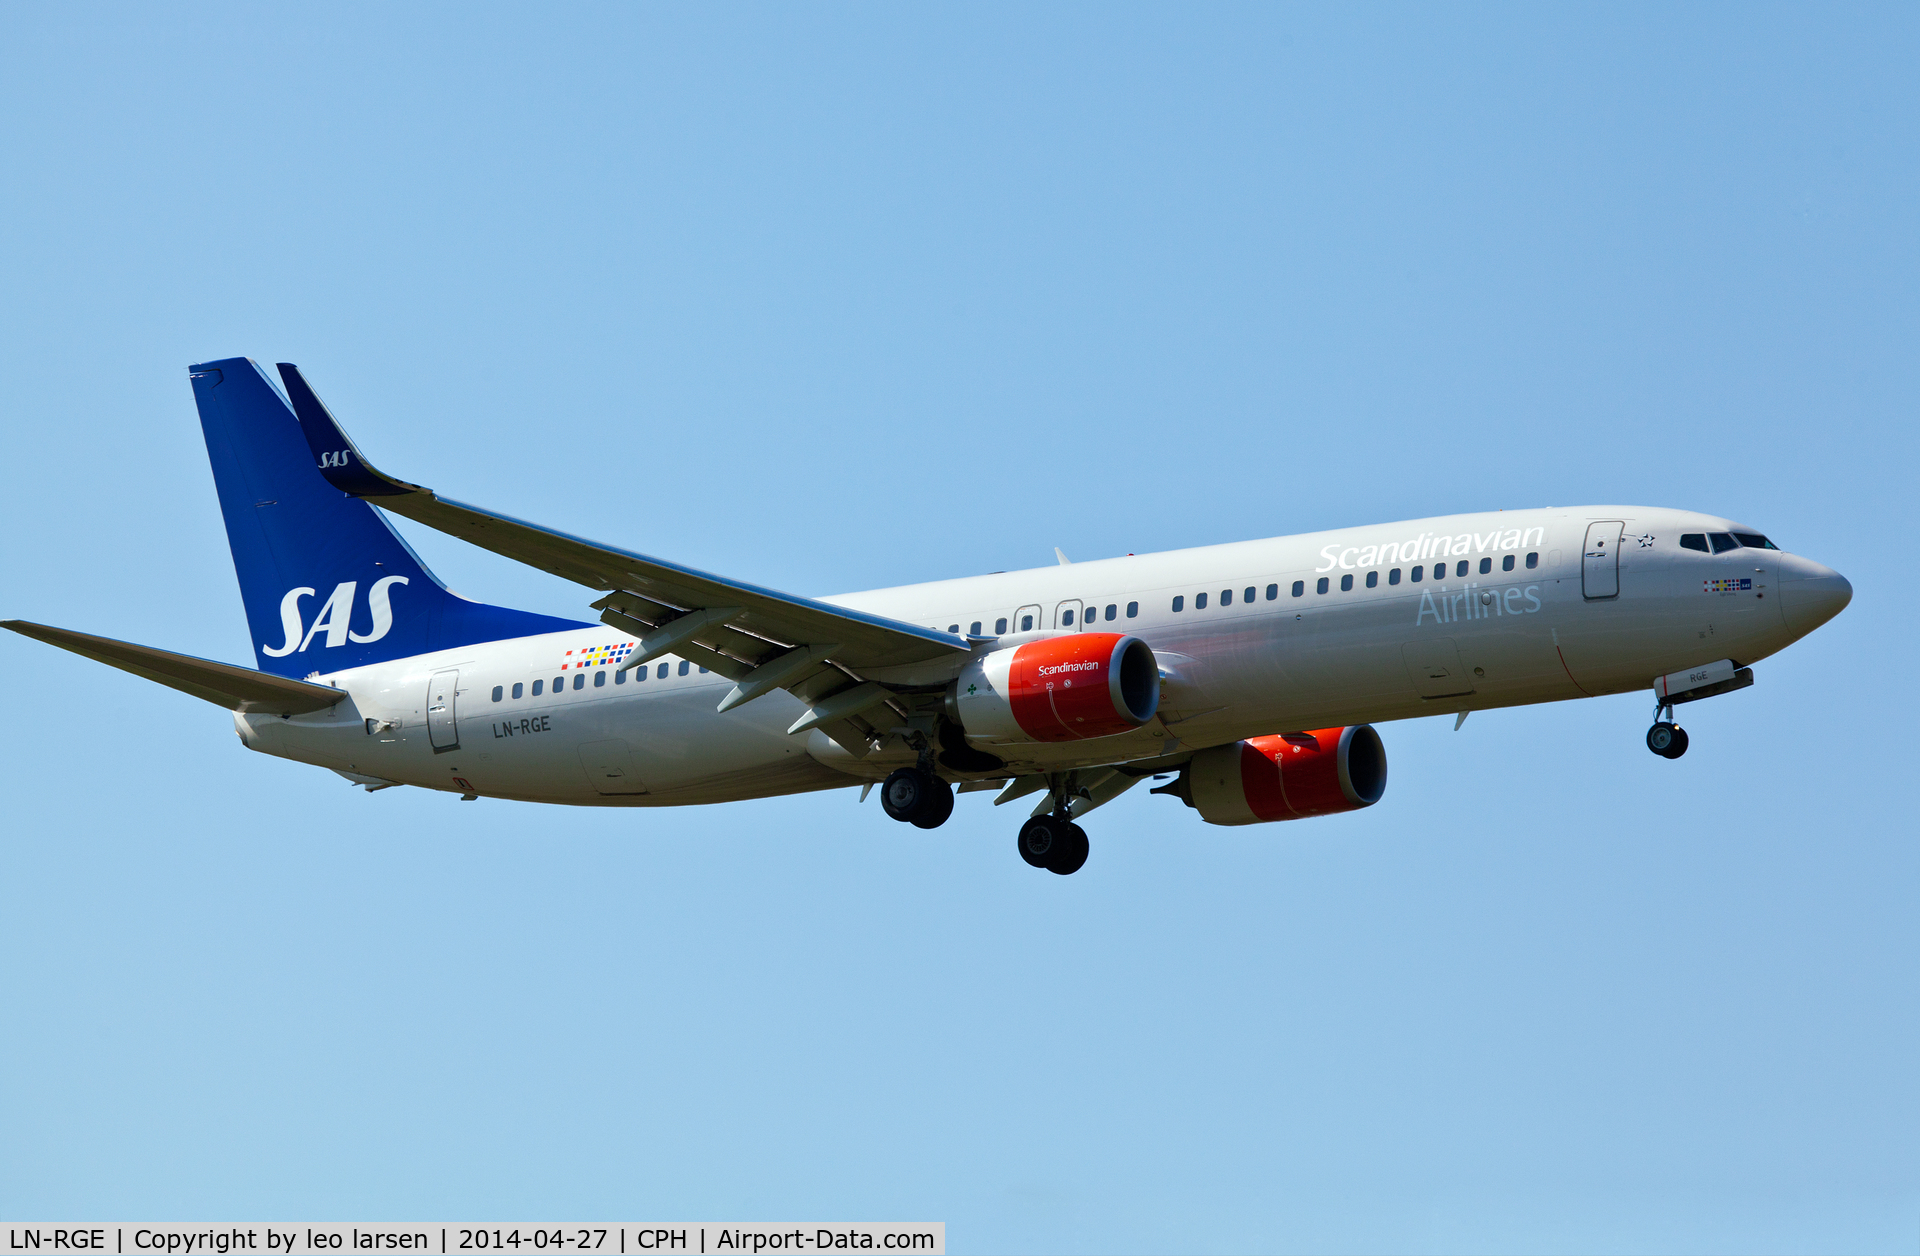 LN-RGE, 2013 Boeing 737-883 C/N 38037, Copenhagen 27.4.2014